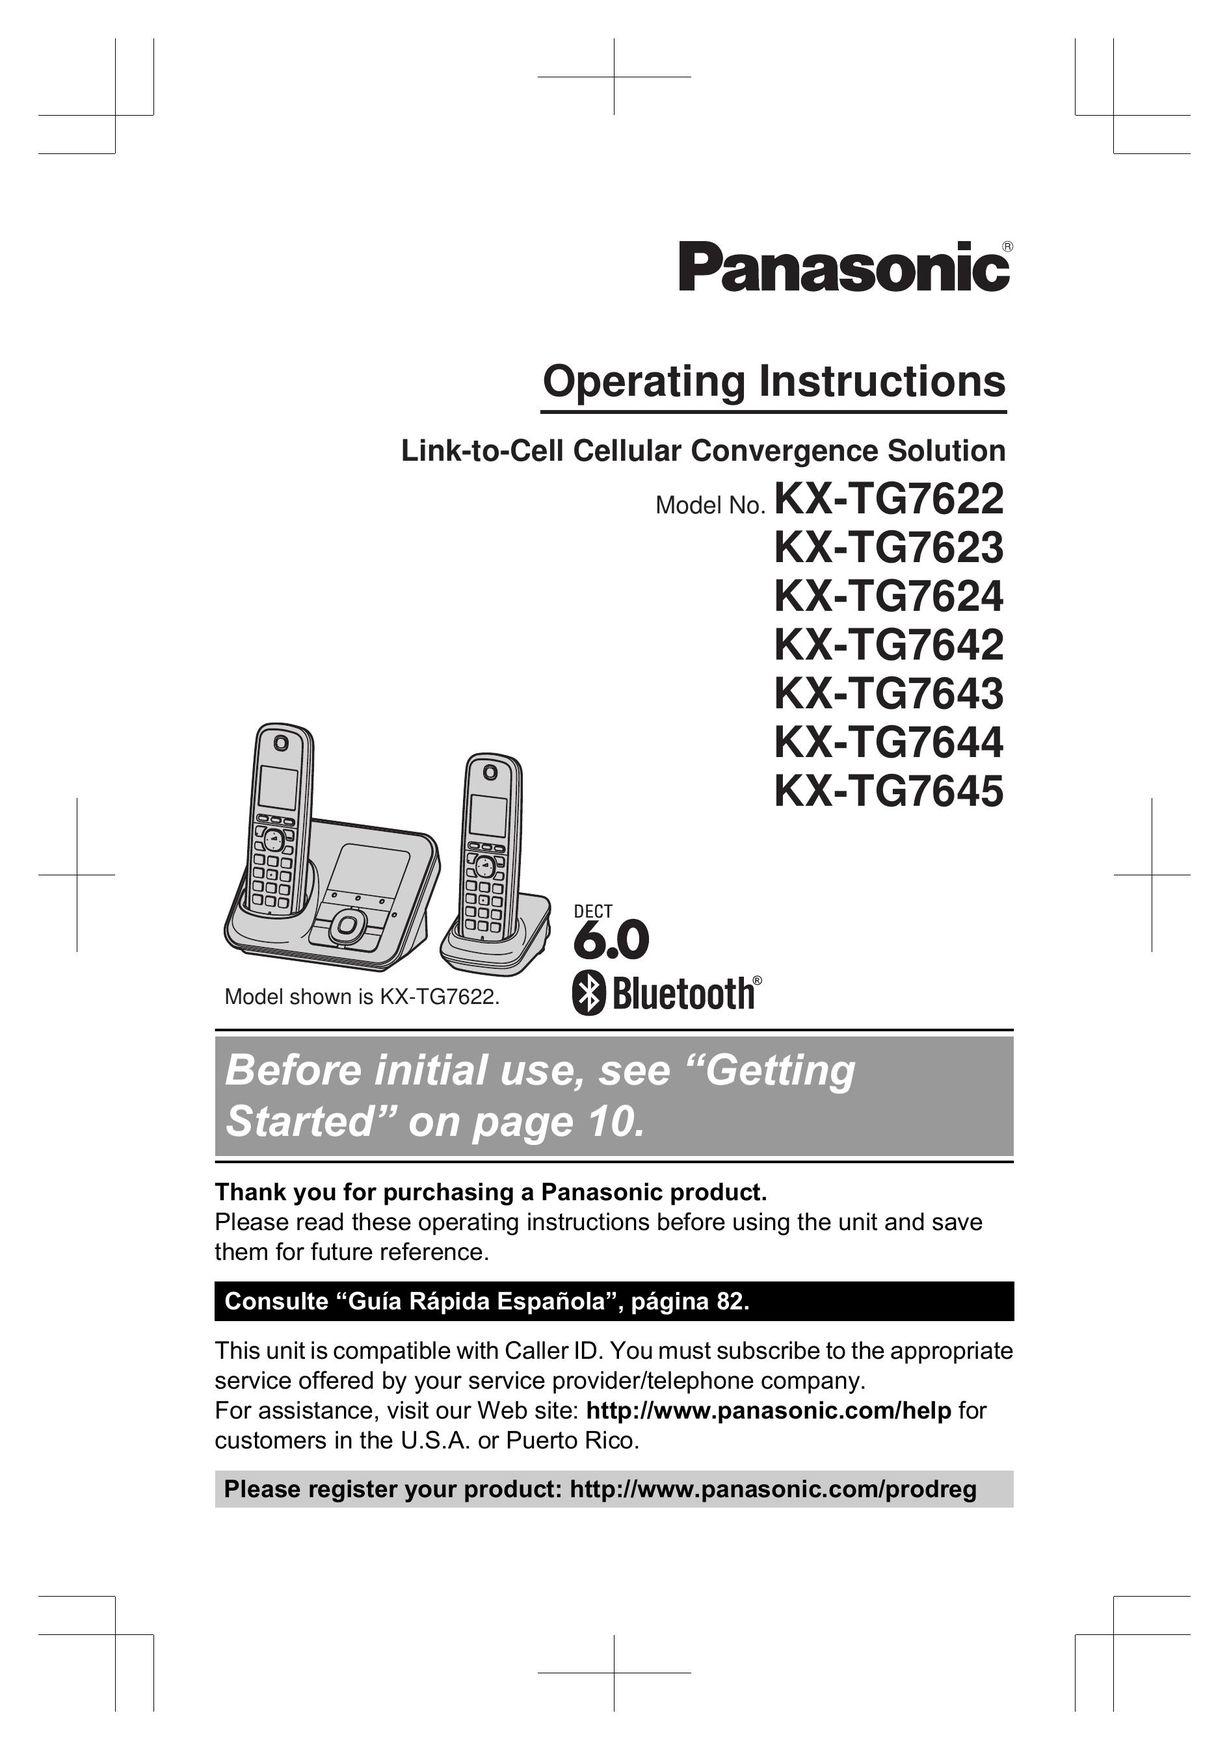 Panasonic KXTG7643M Bluetooth Headset User Manual